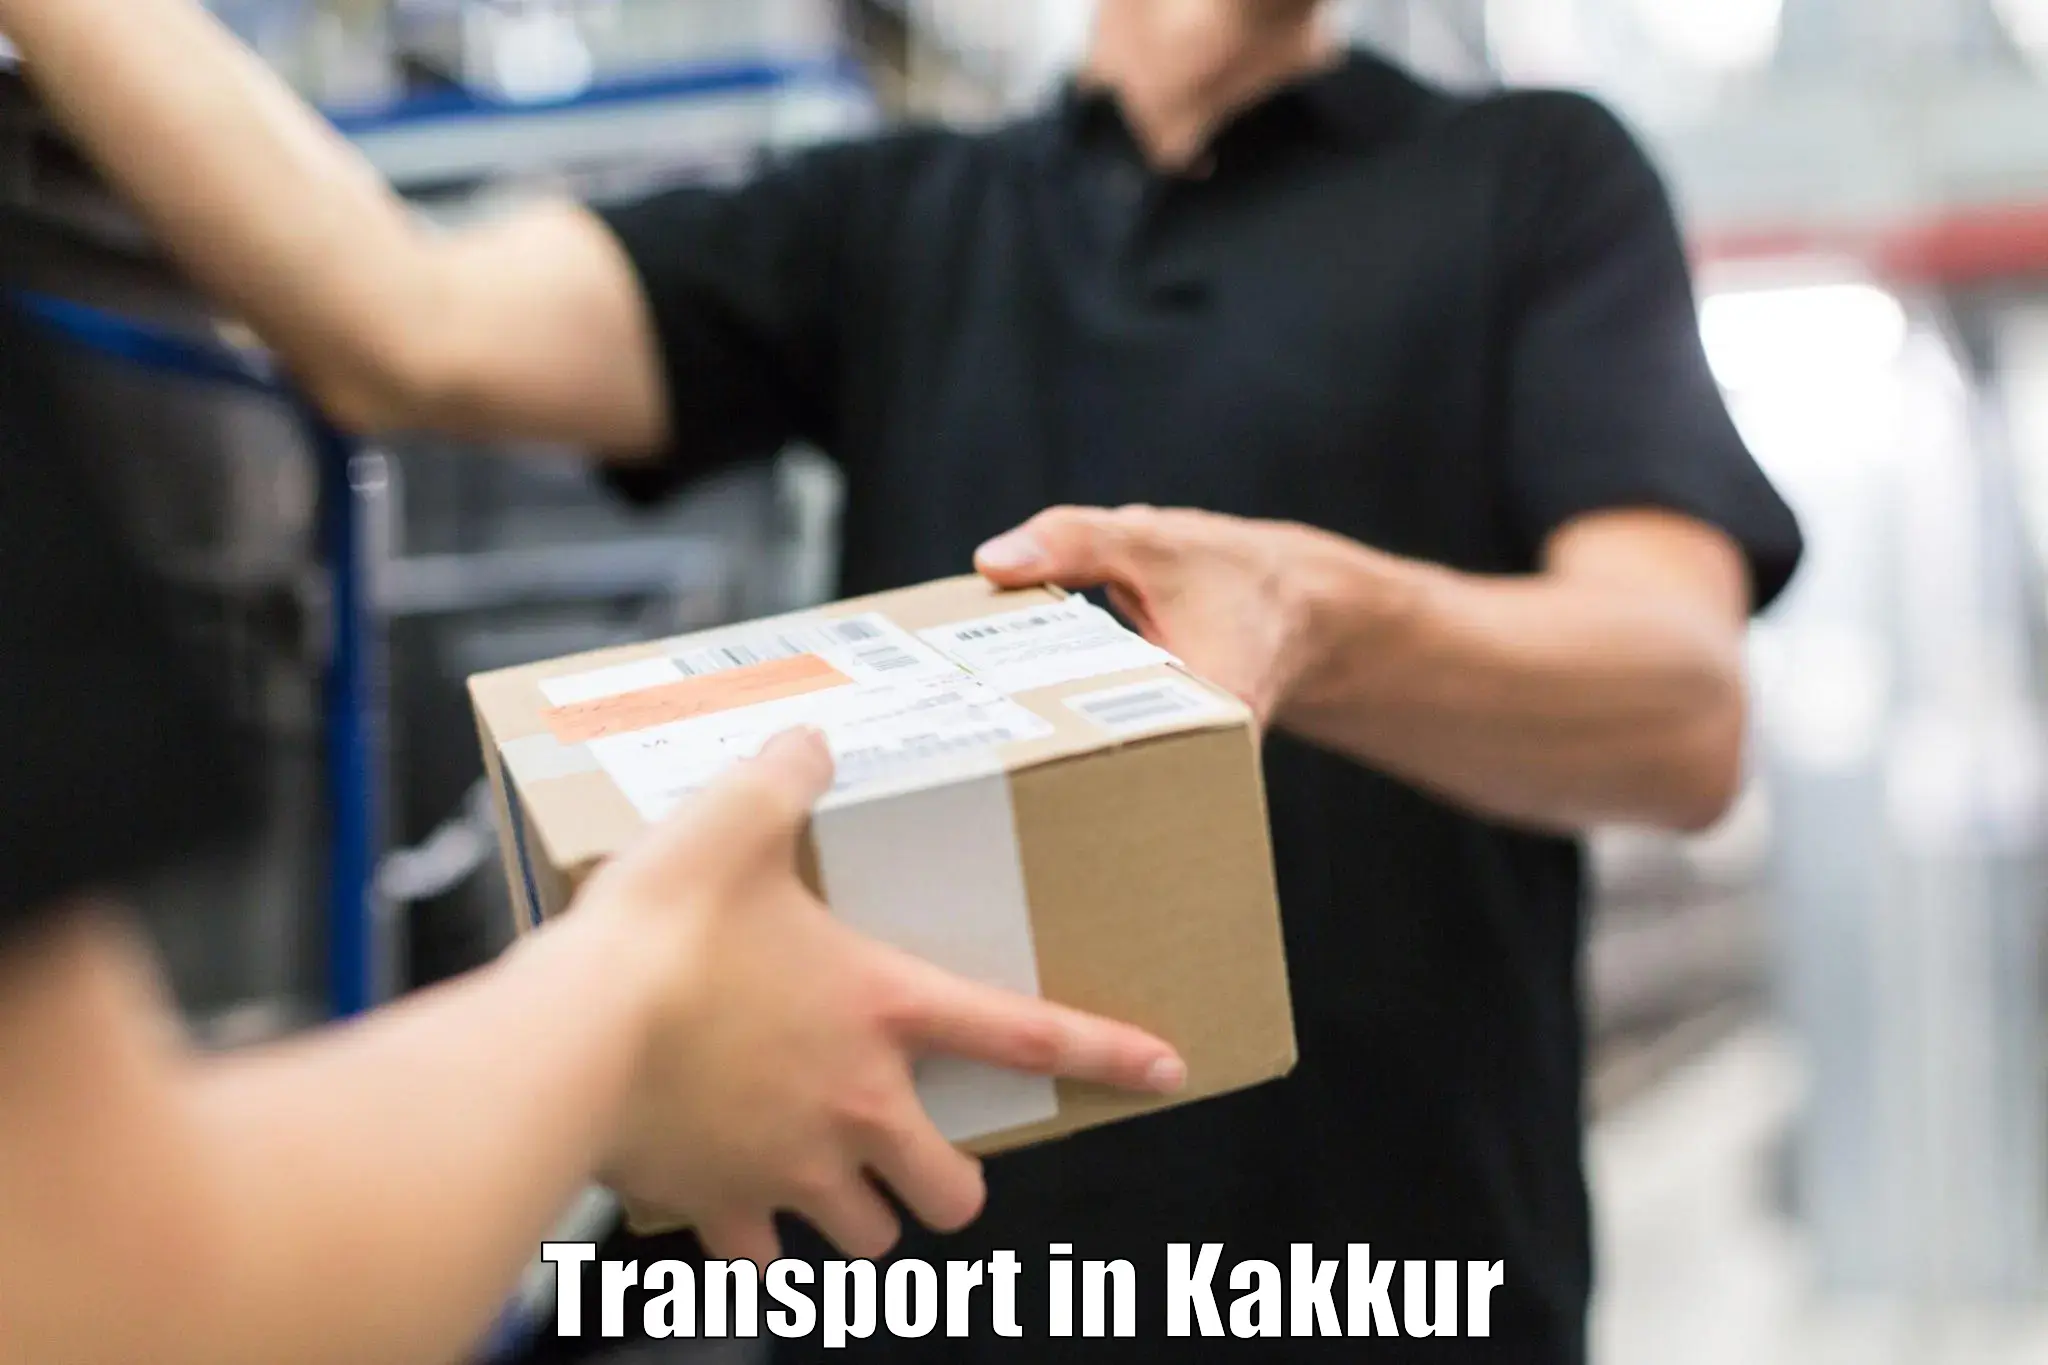 Online transport service in Kakkur